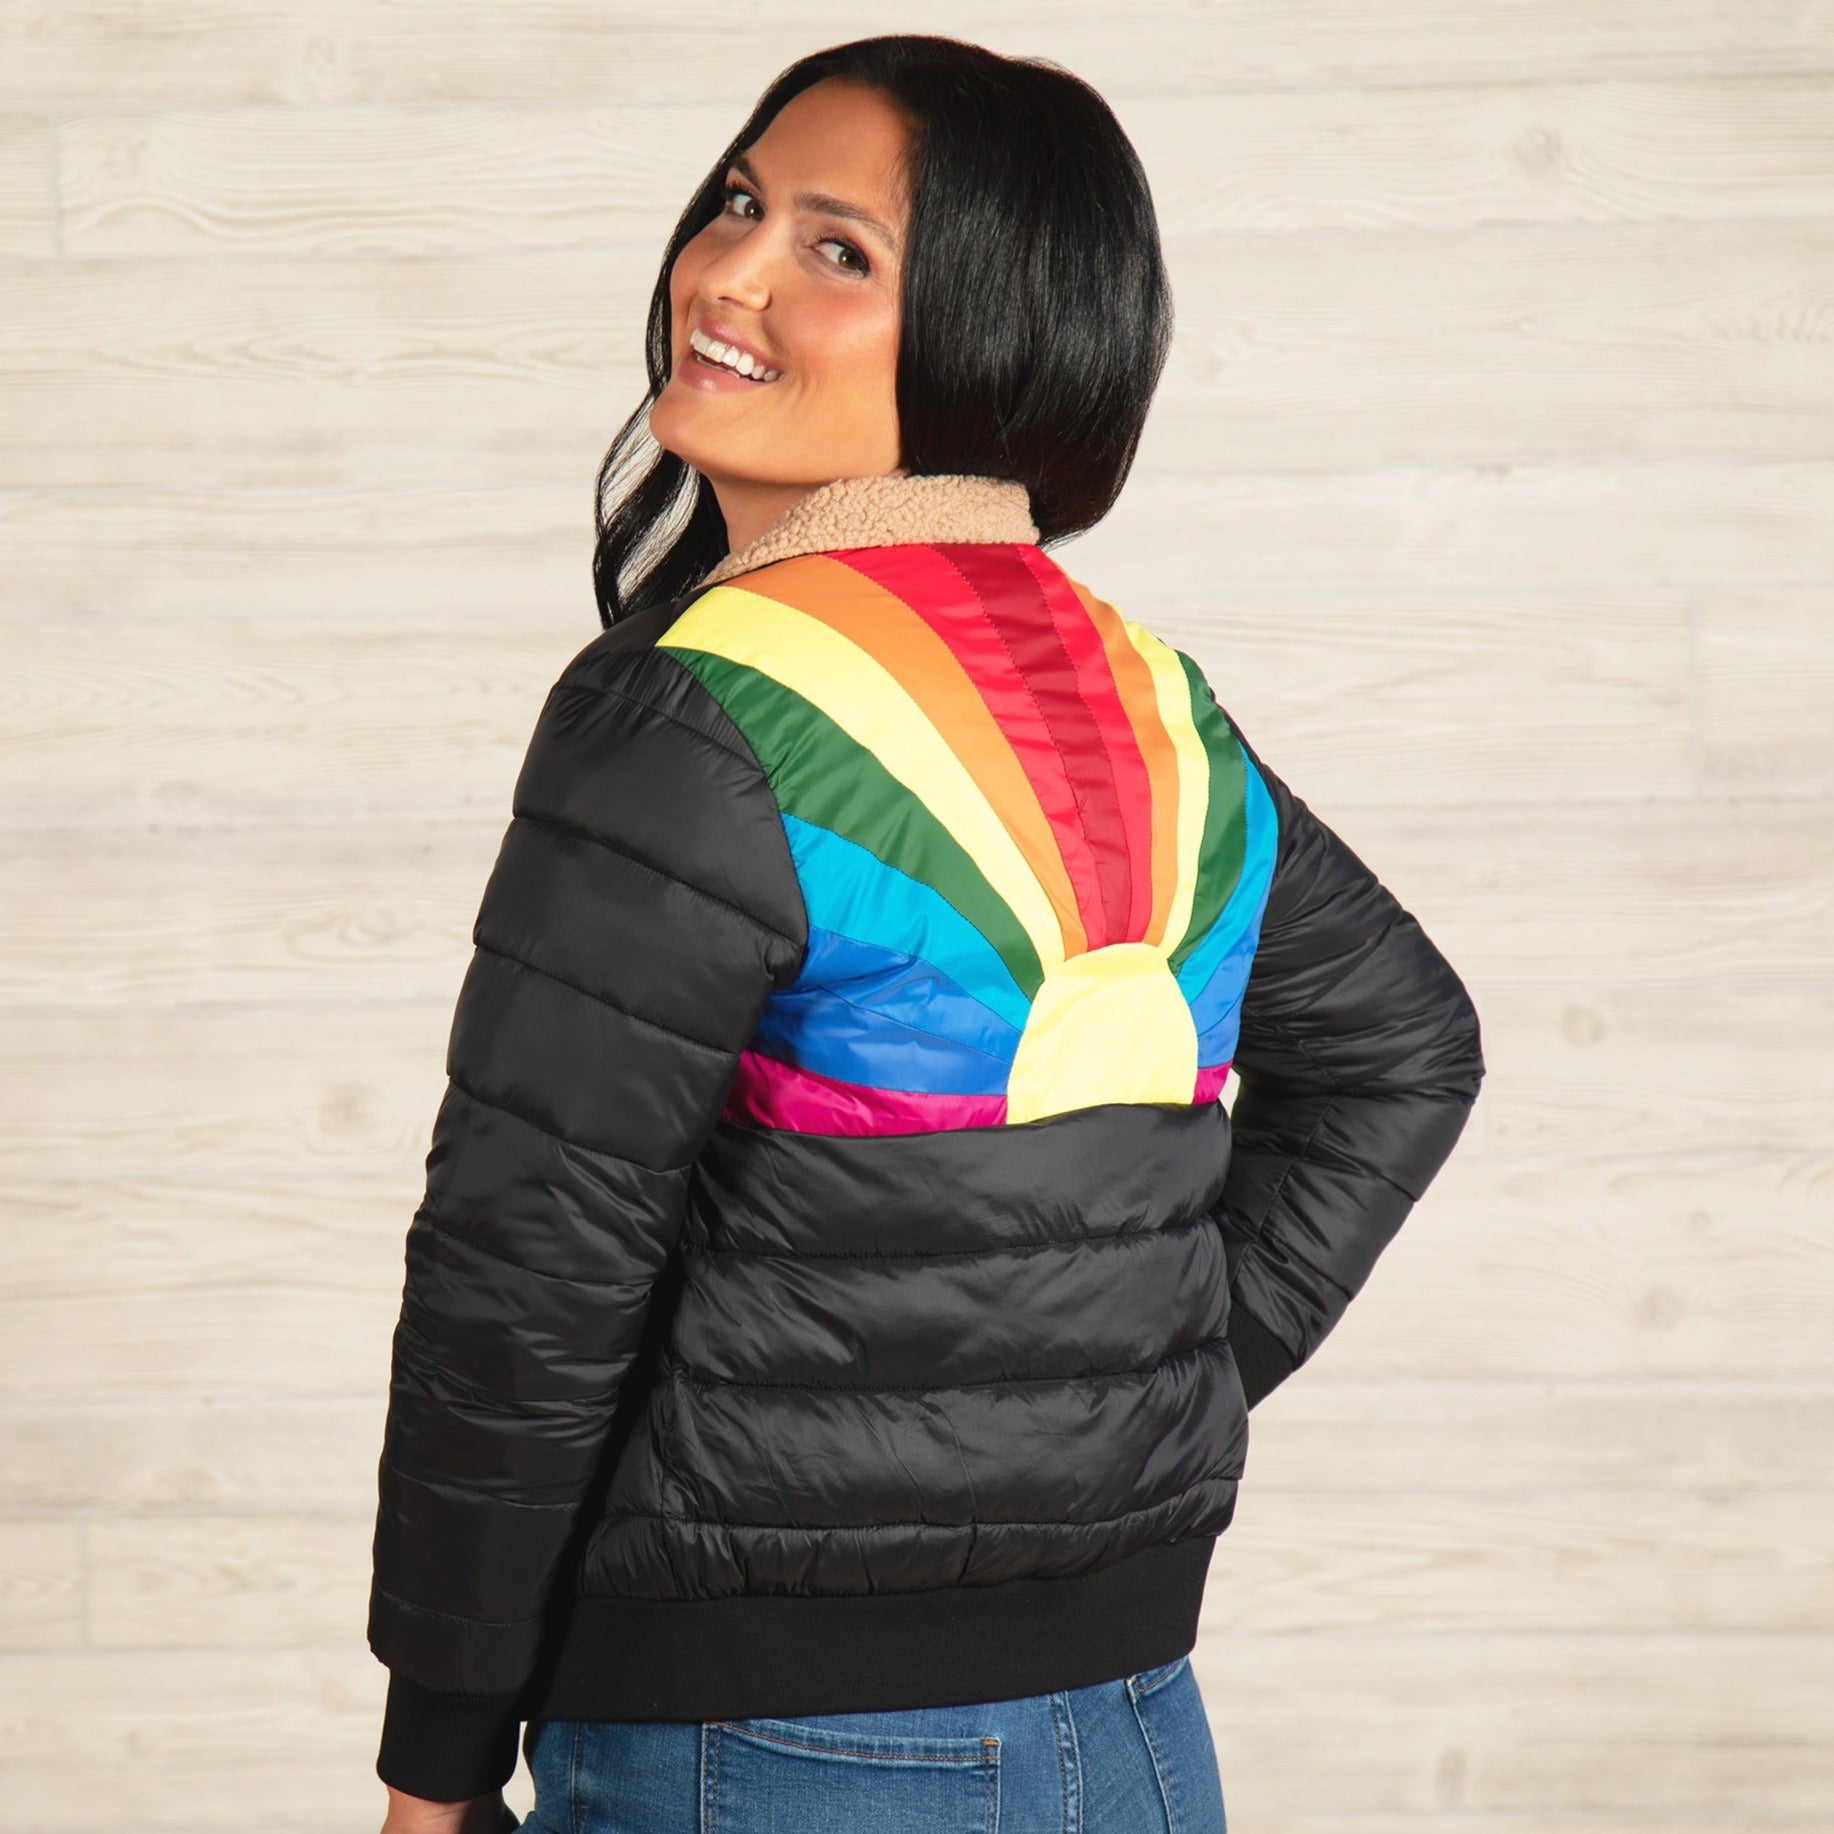 Chasing Rainbows Retro Stripe Insulated Jacket - Black - S